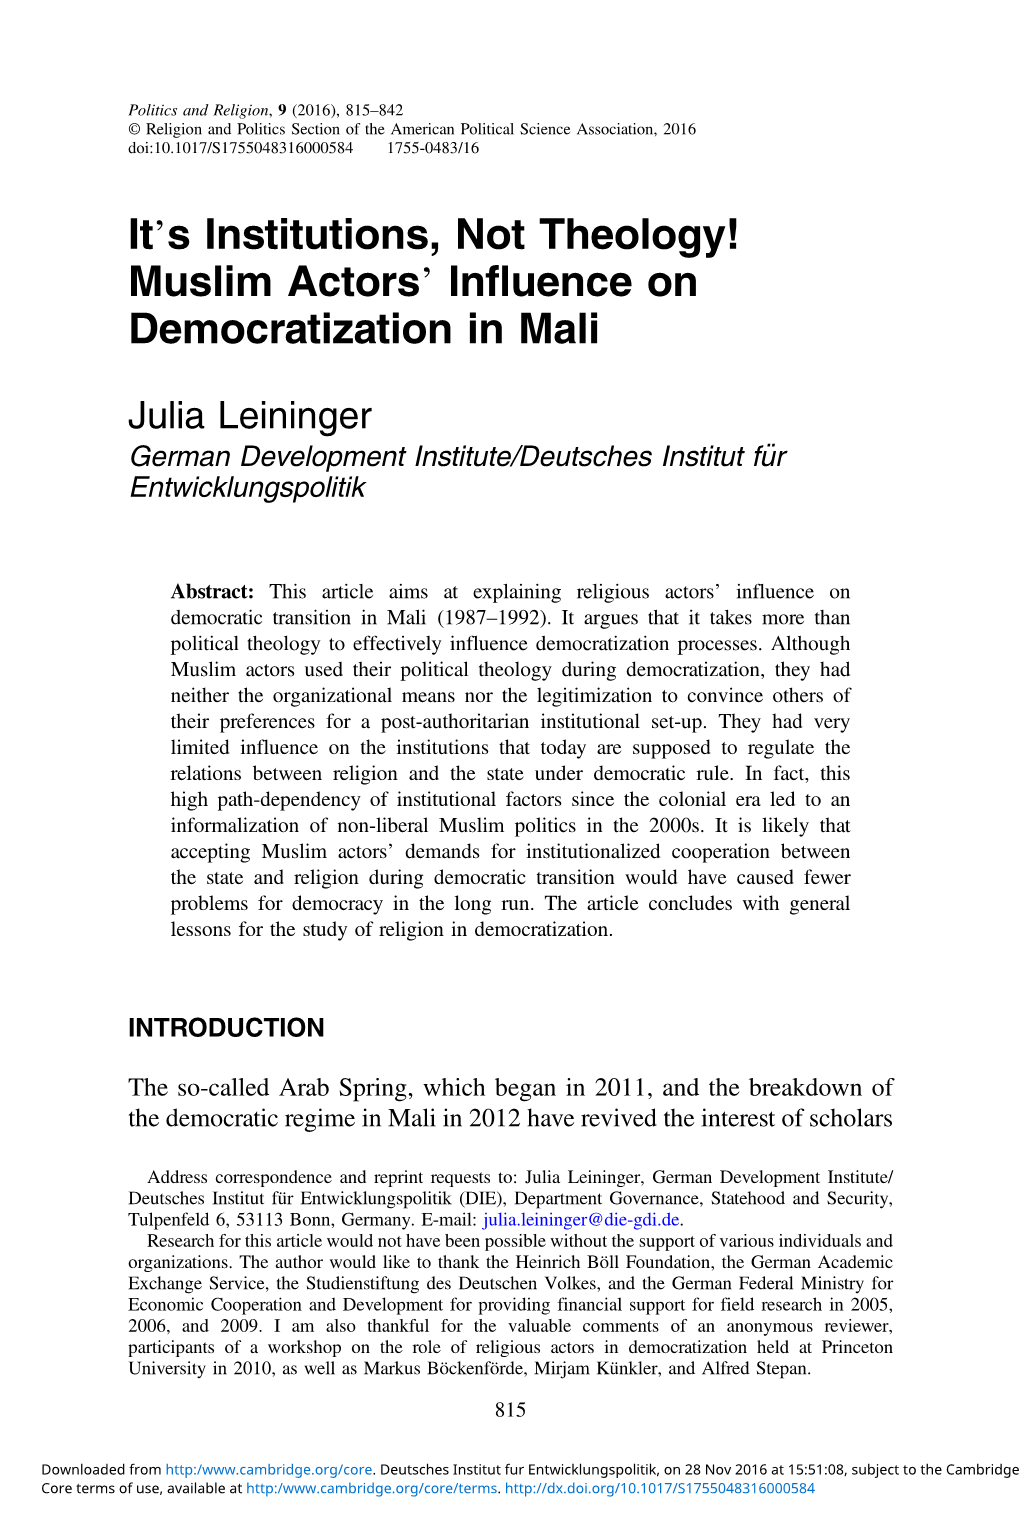 Muslim Actors' Influence on Democratization in Mali